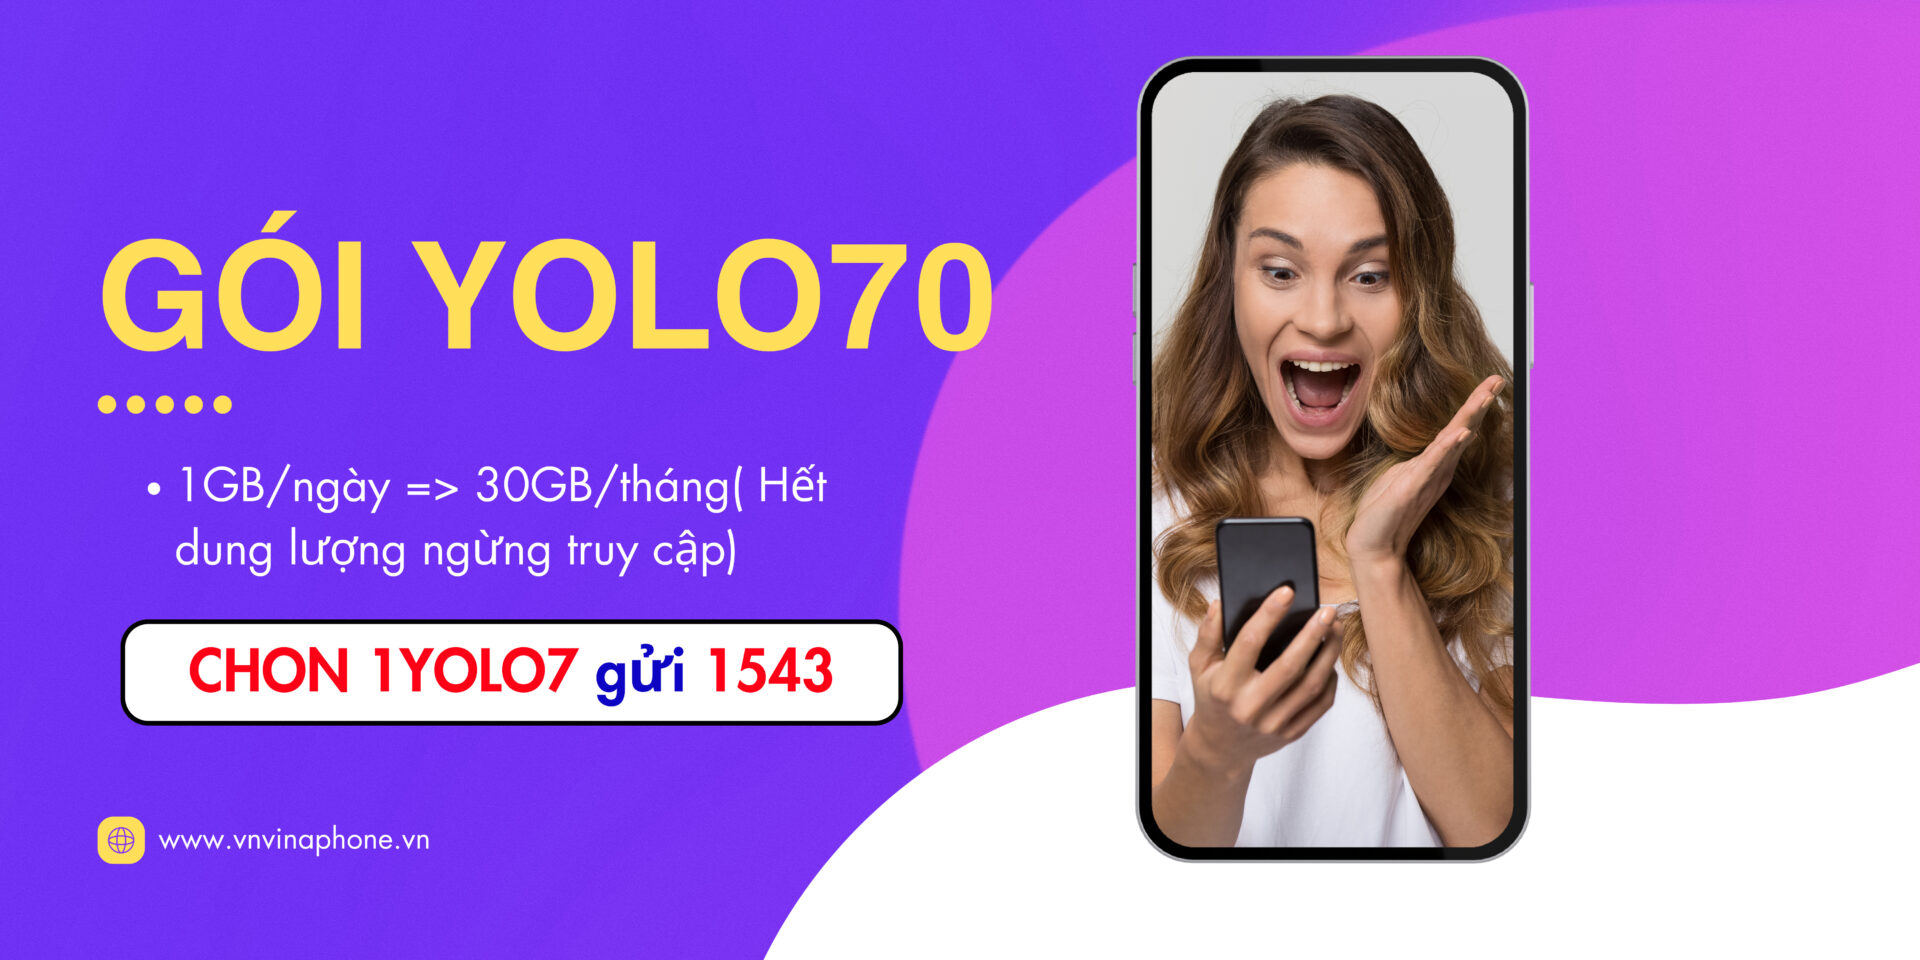 goi-yolo70-vinaphone